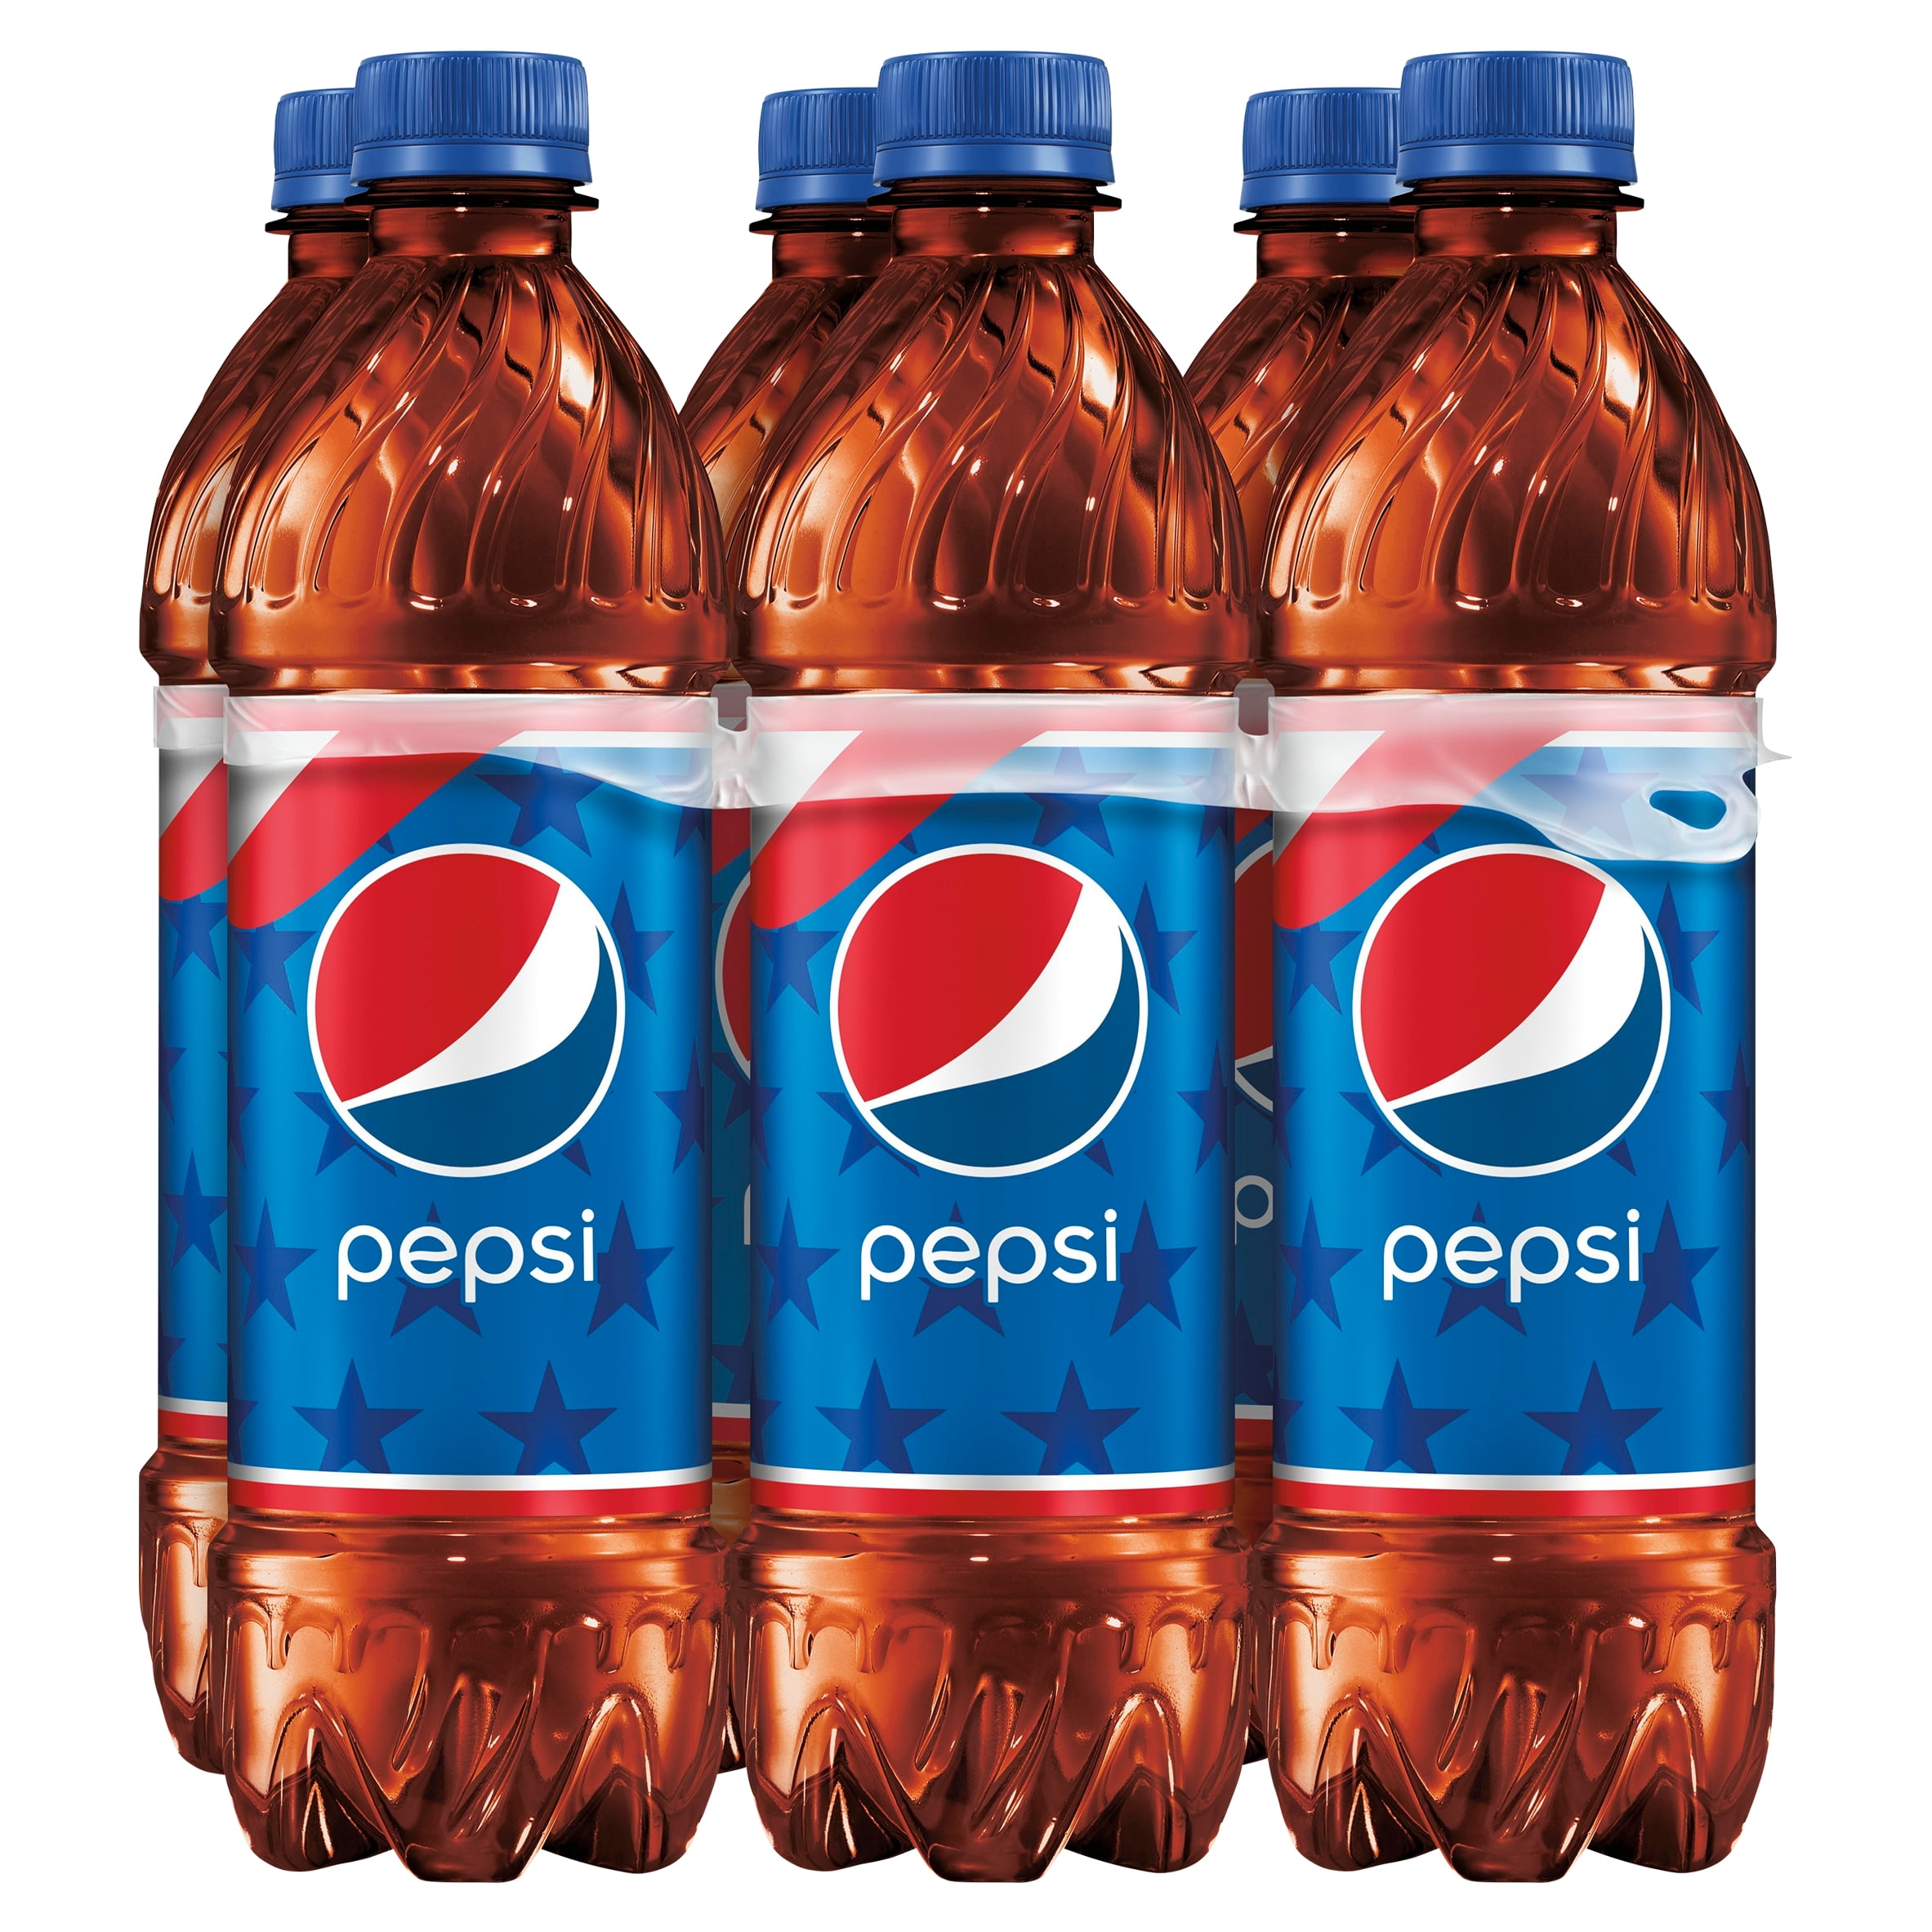 Buy Pepsi Cola Soda Pop, 16.9 oz, 6 Pack Bottles Online at Lowest Price